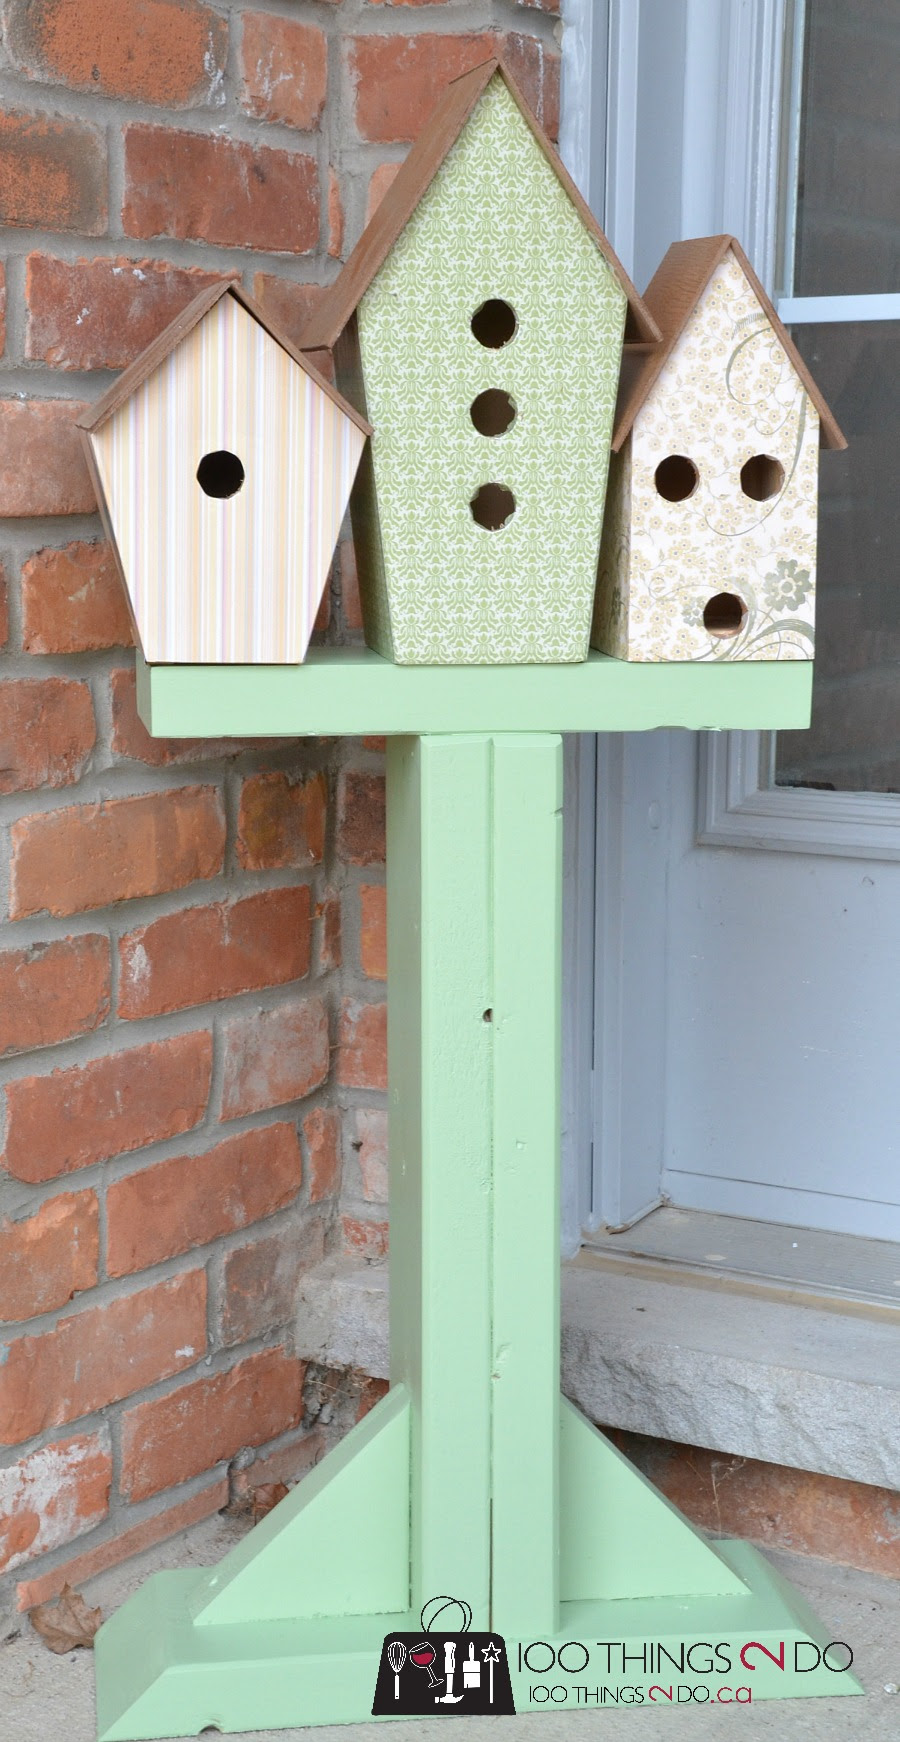 Birdhouse display, birdhouse decor, birdhouses on post, front porch decor, Spring front porch, National DIY Day, Craftbox Girls